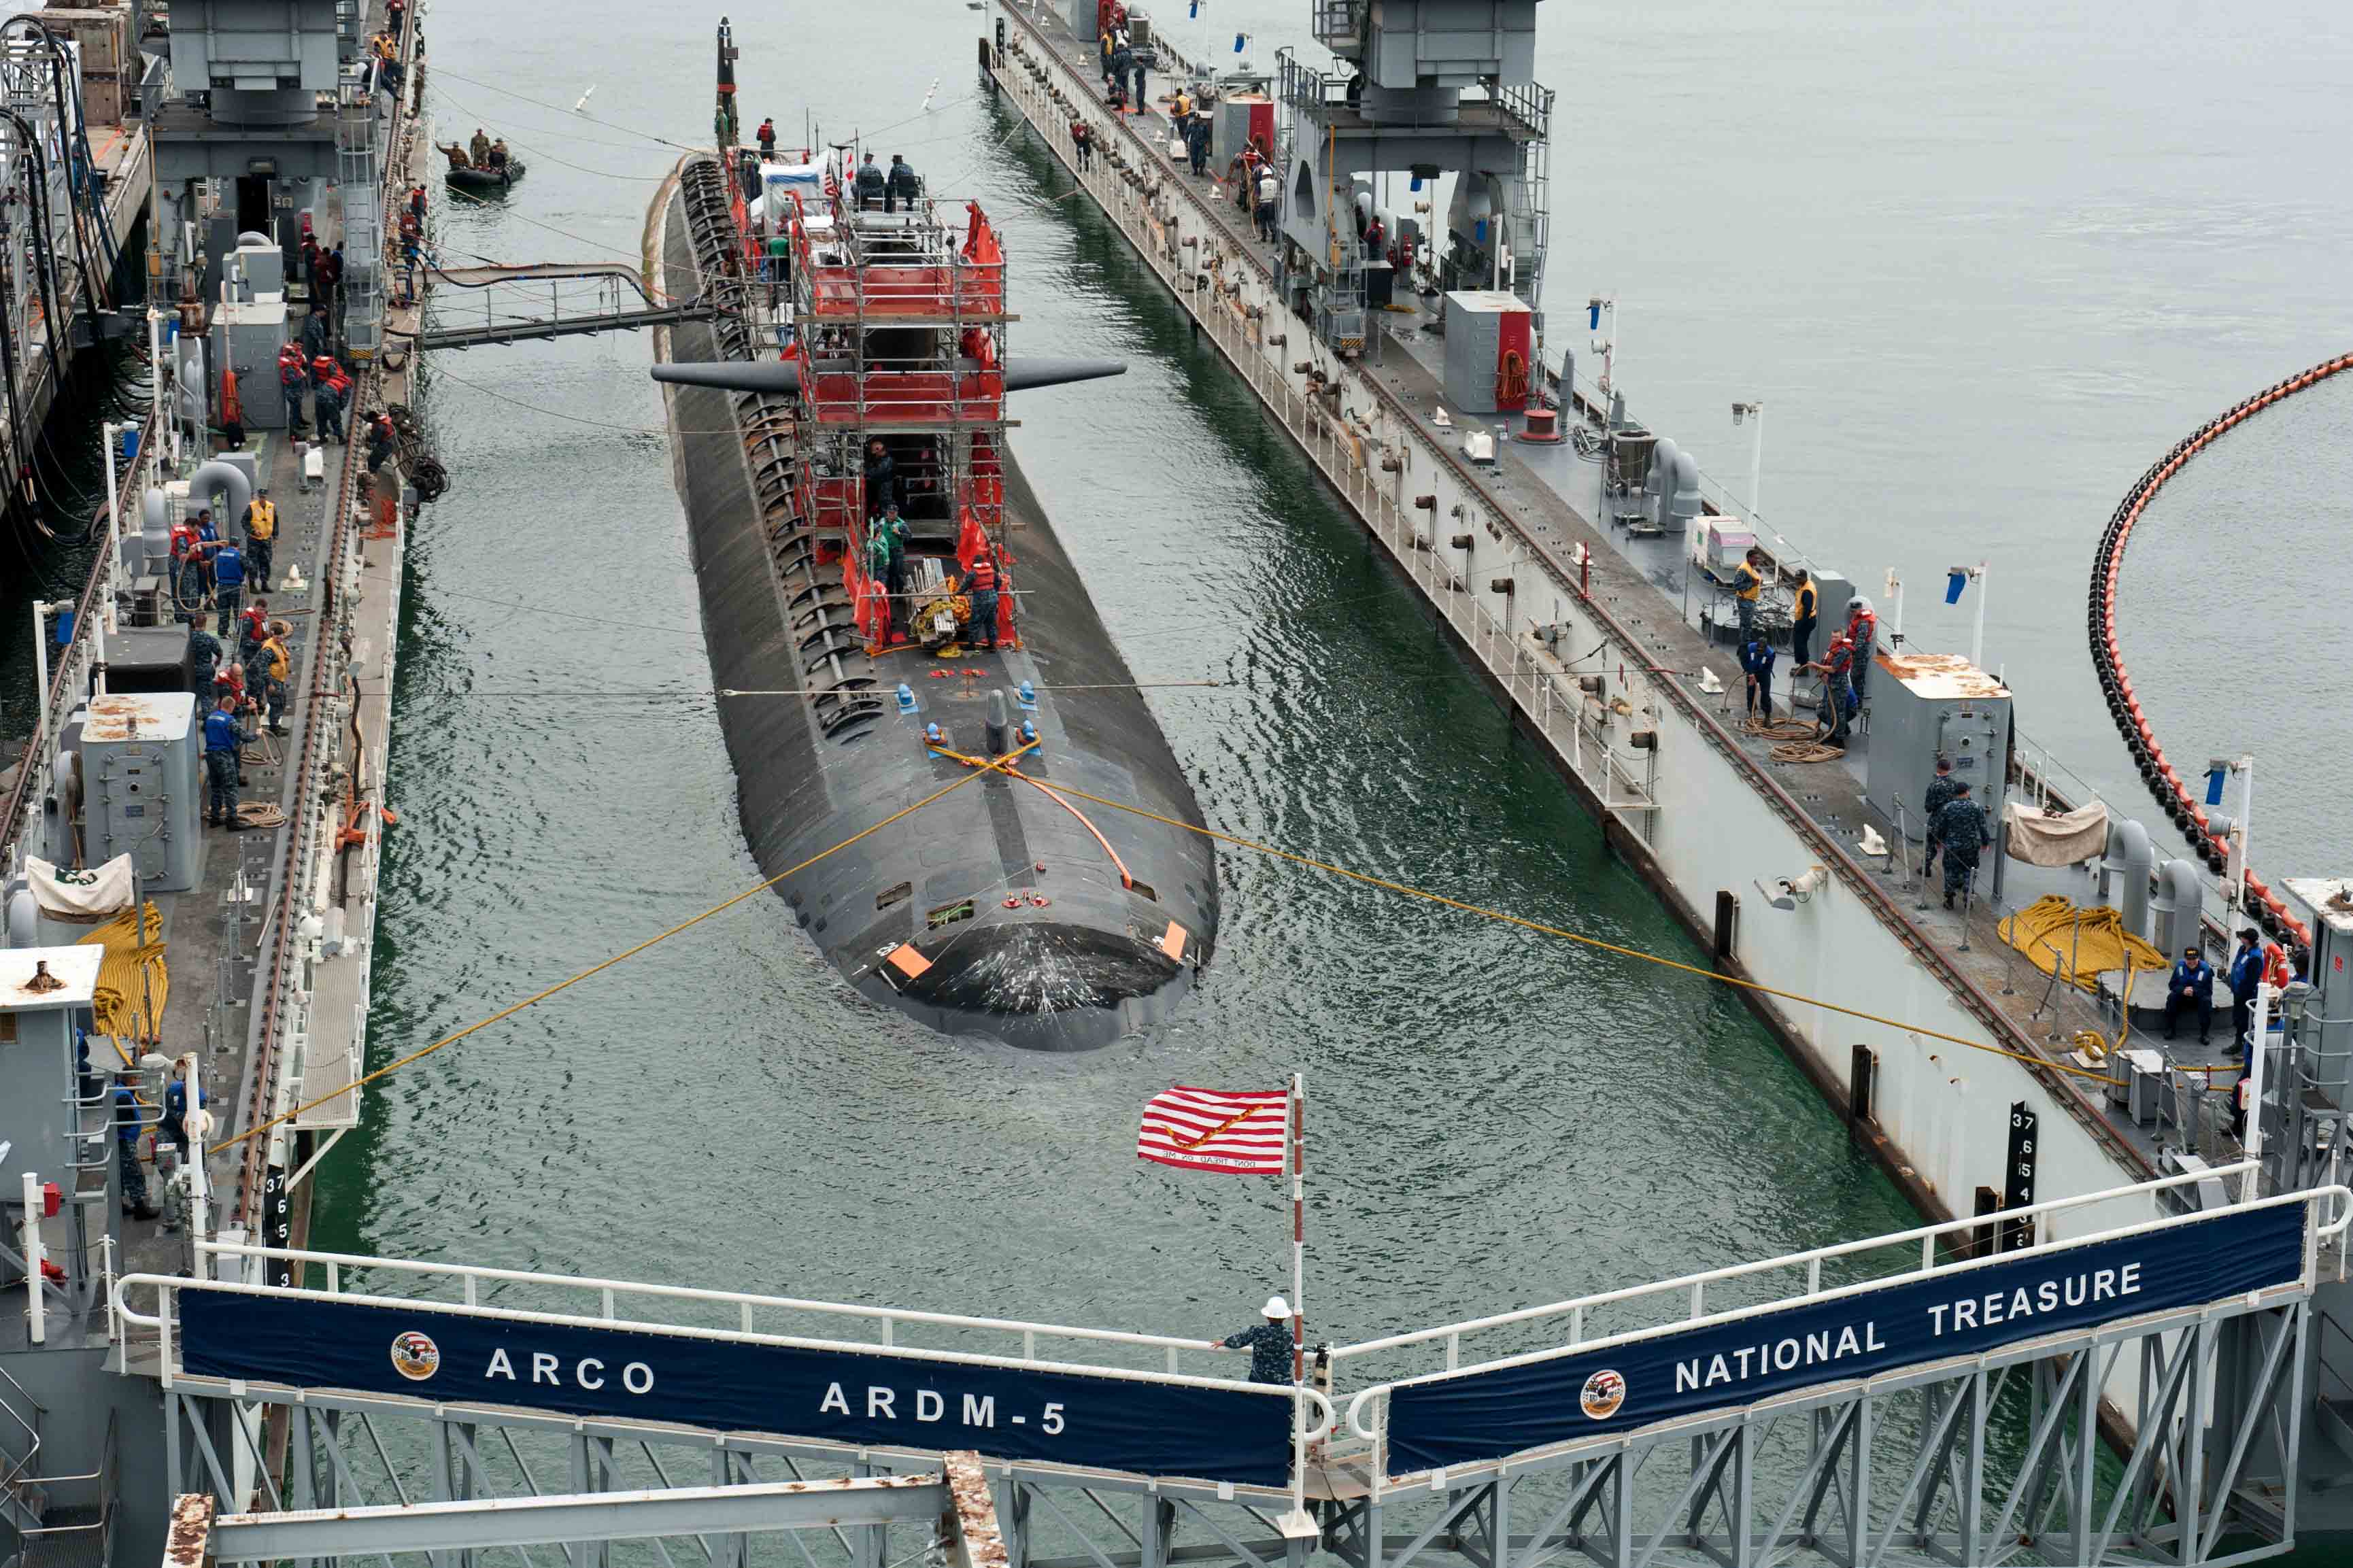 USS OKLAHOMA CITY SSN-723 am 05.05.2016 im Trockendock ARCO ARDM-5 Bild: U.S. Navy